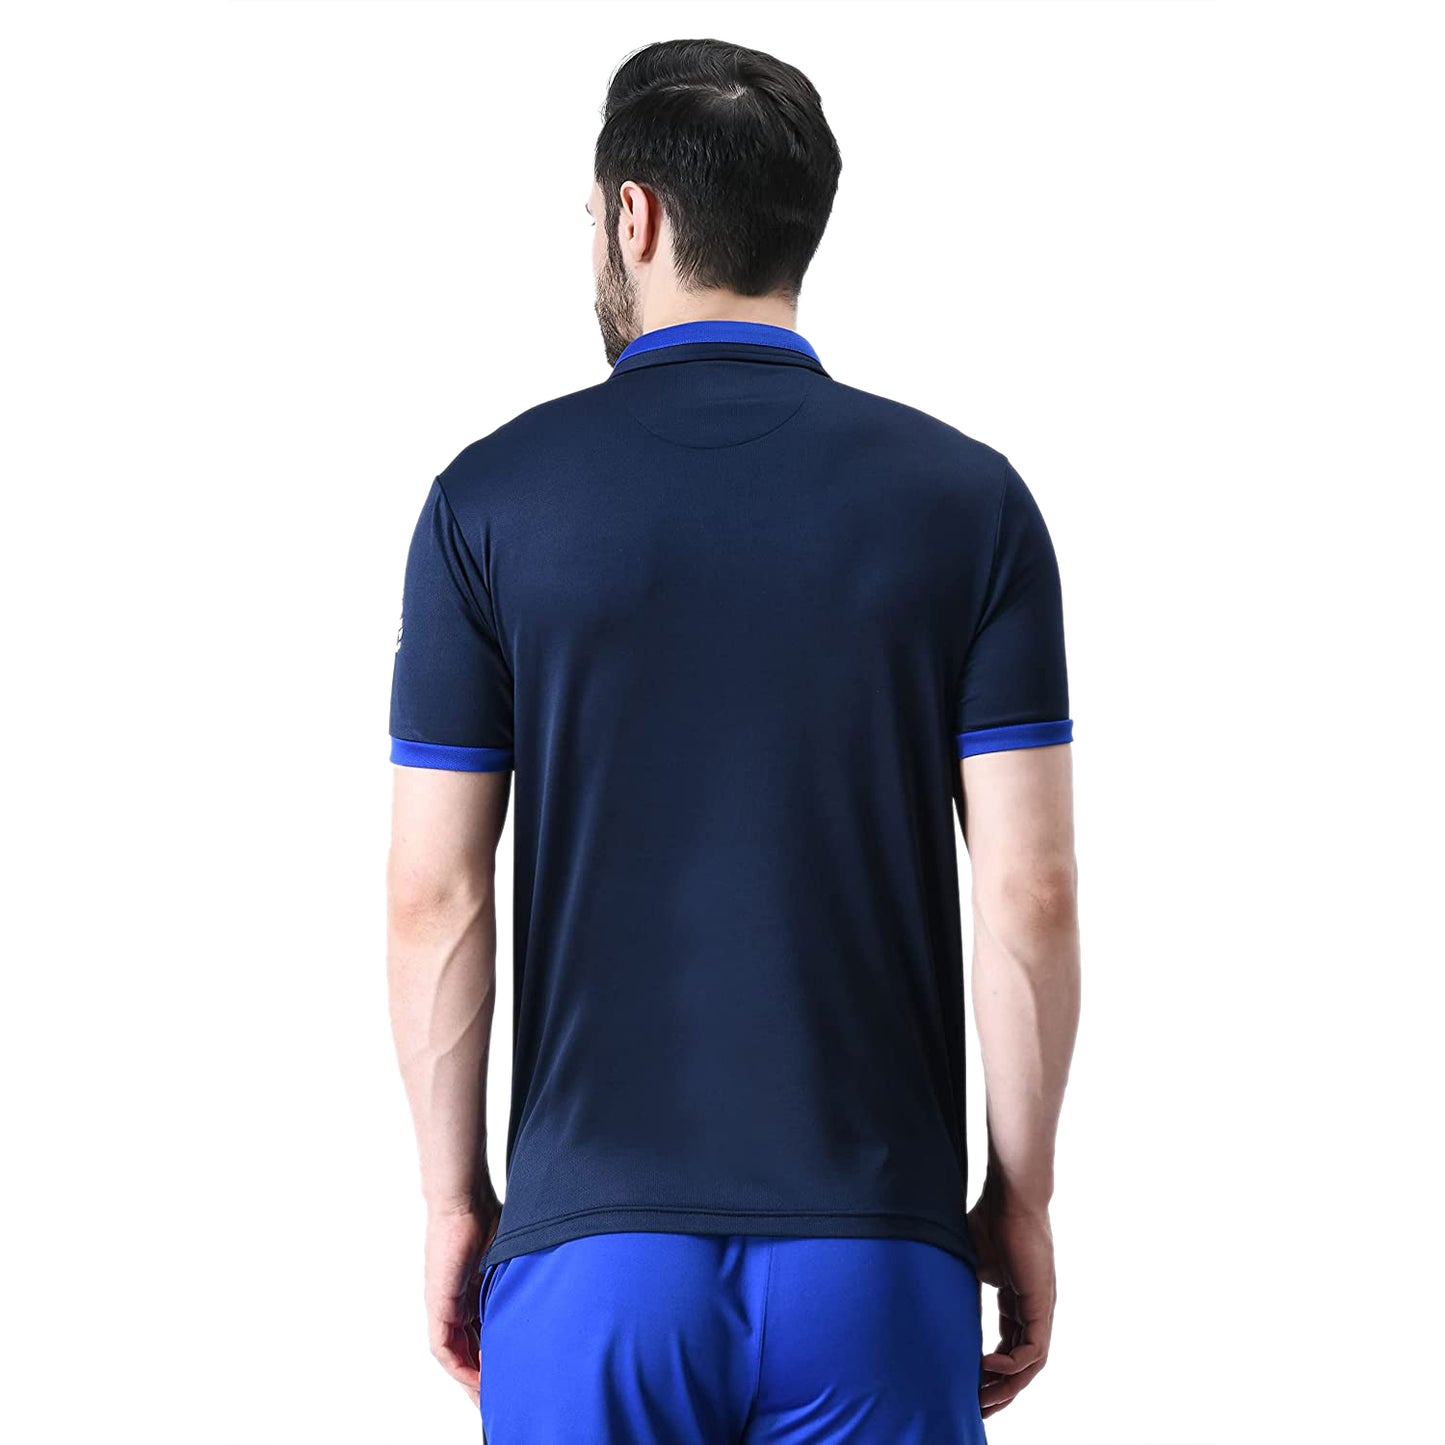 Playr Icc T20 Men's Regular Fit T-Shirt, Navy/Royal - Best Price online Prokicksports.com